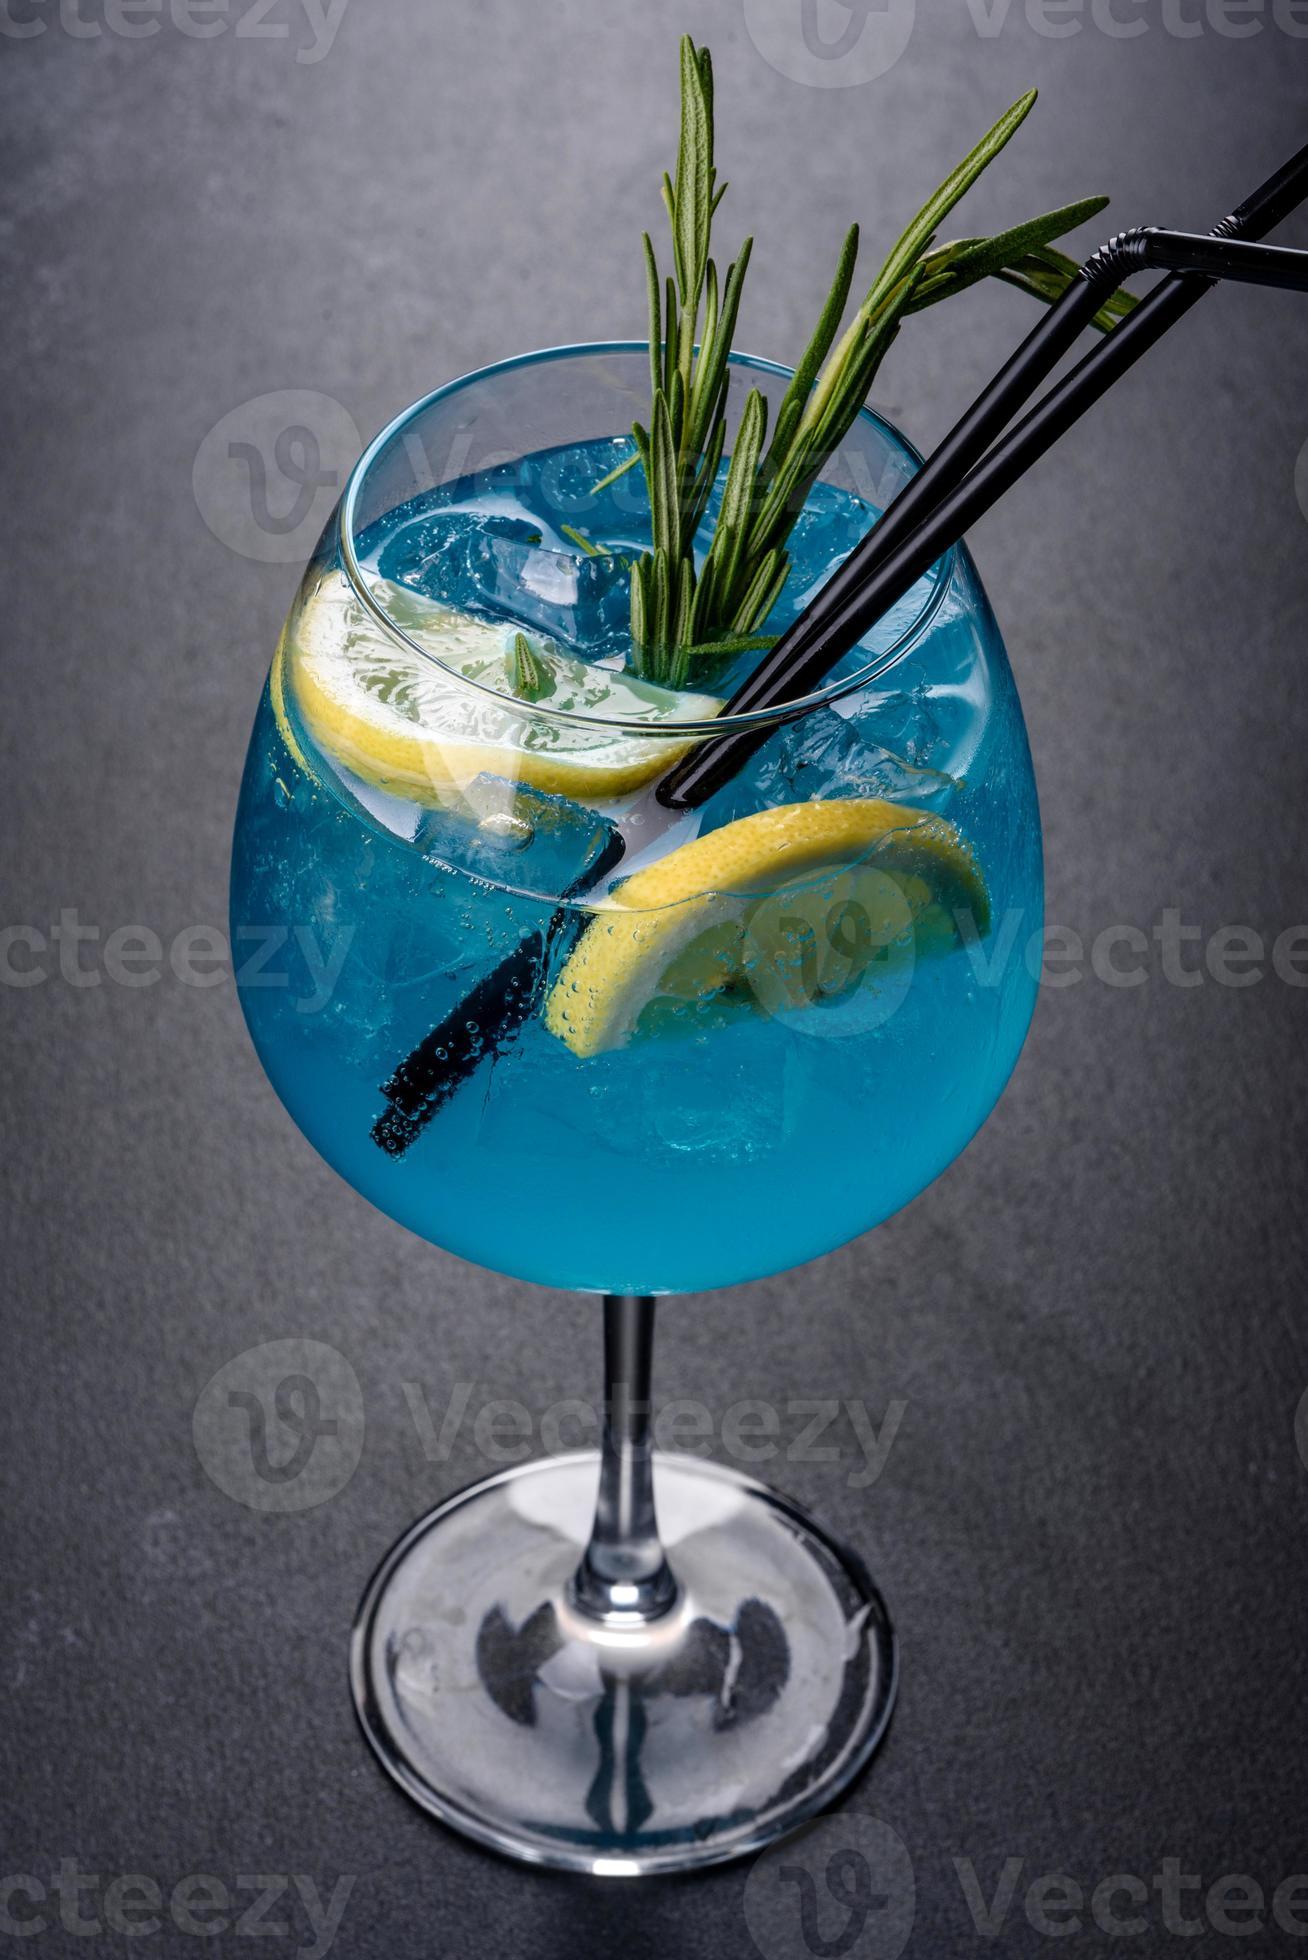 Katholiek Won volleybal alcoholische cocktail blue curacao met ijs, citroen en cocktailtubes  2983062 Stockfoto